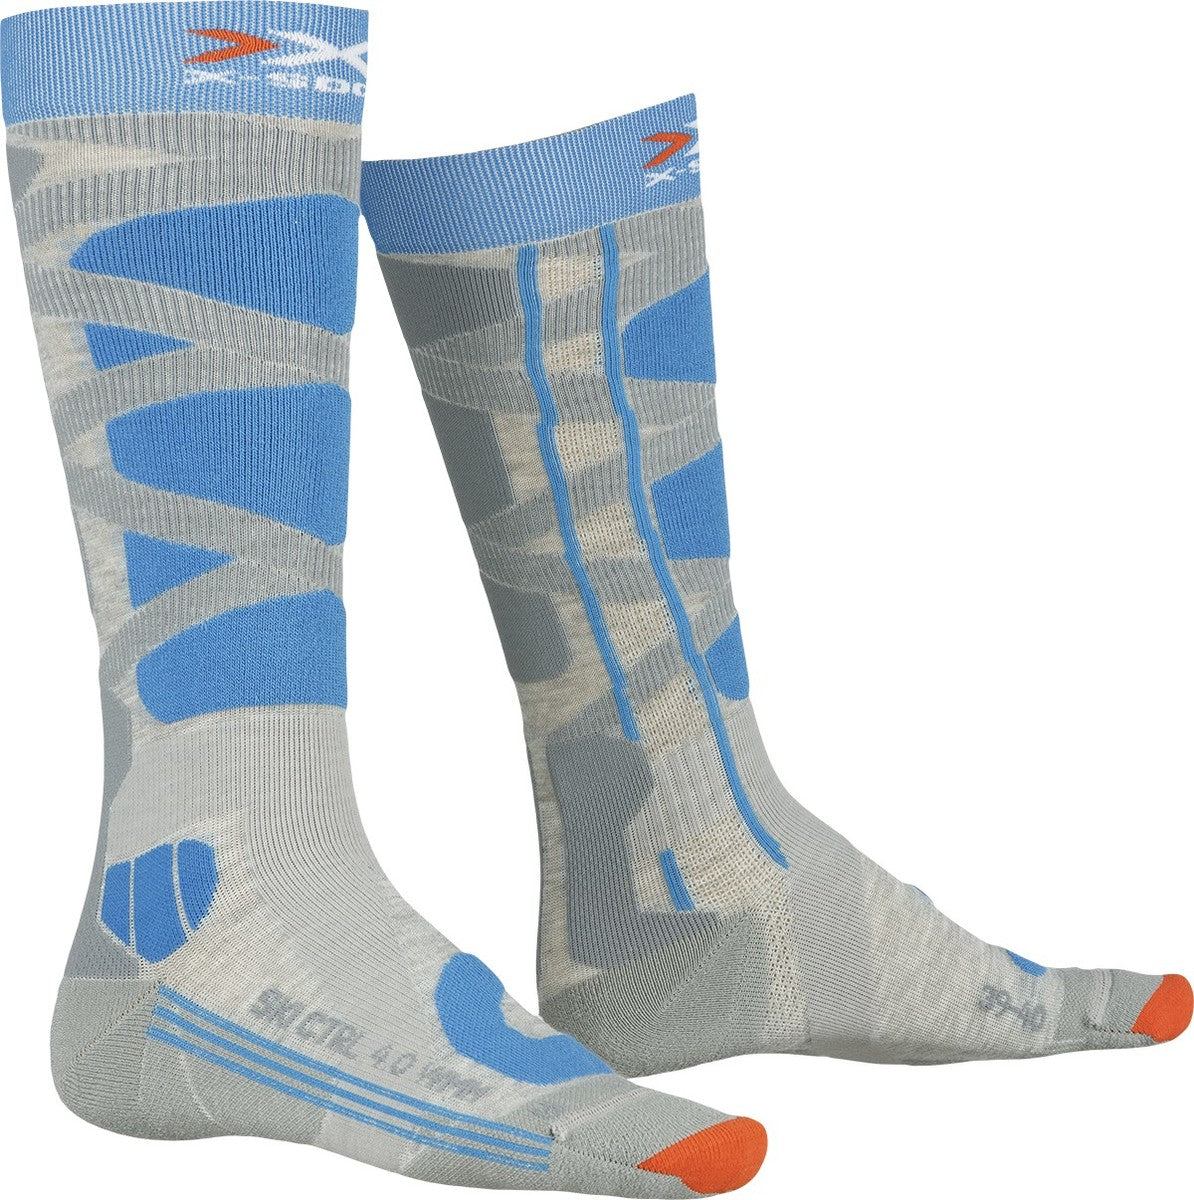 X-Socks Ski Control 4.0 W skisokken grijs/blauw dames